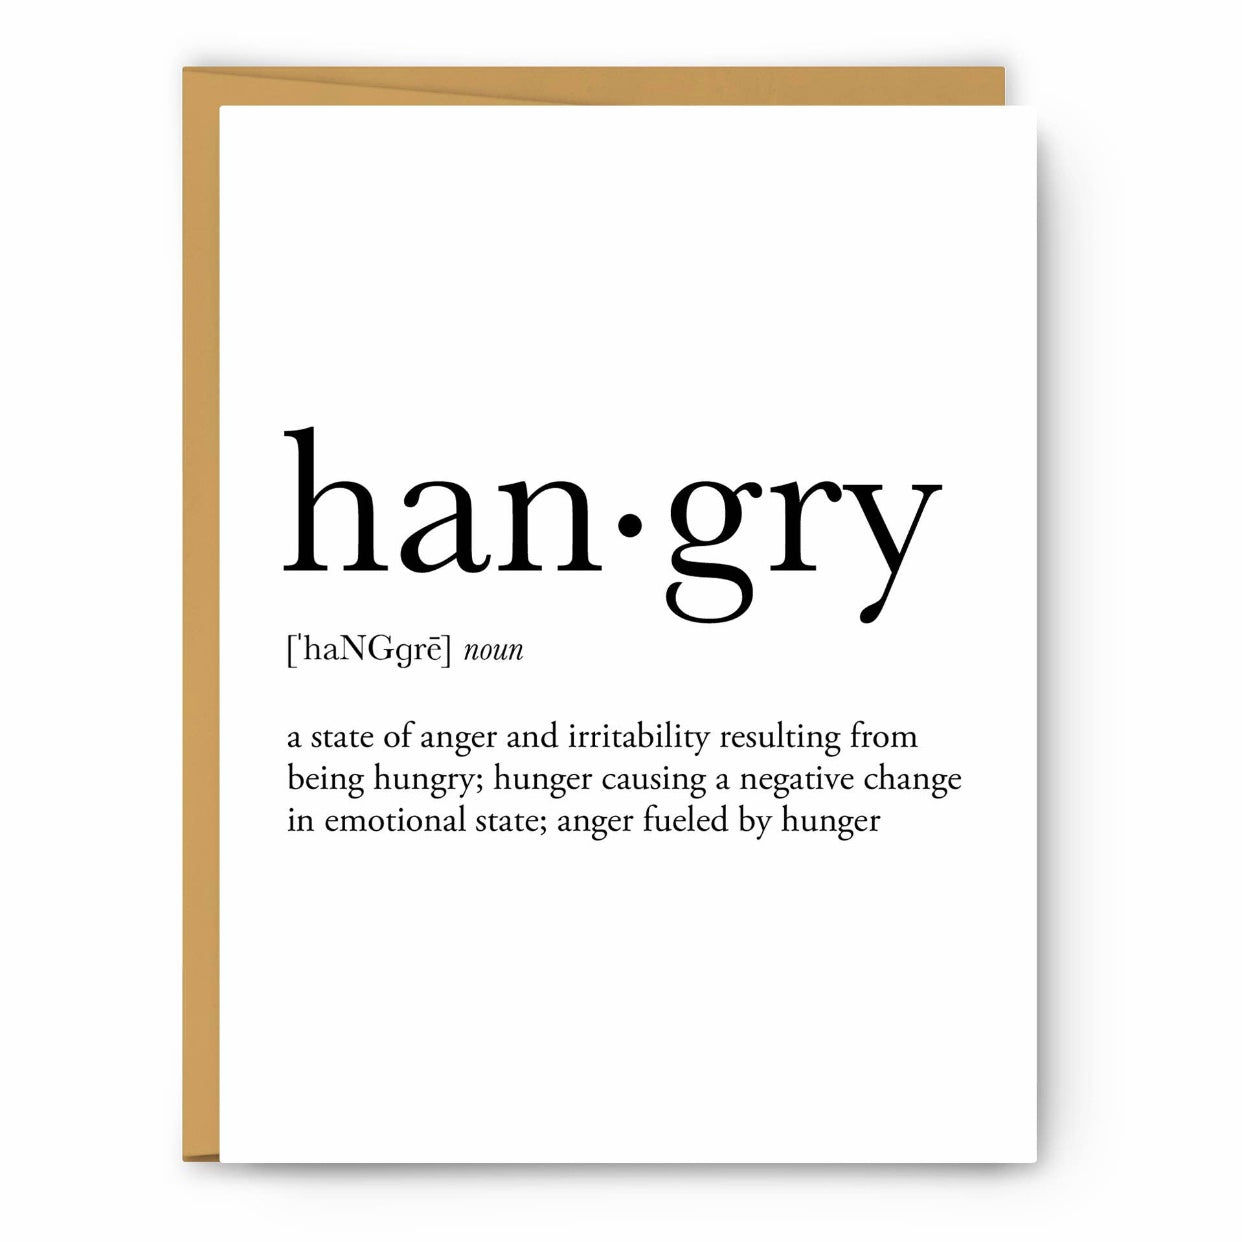 hangry noun greeting card